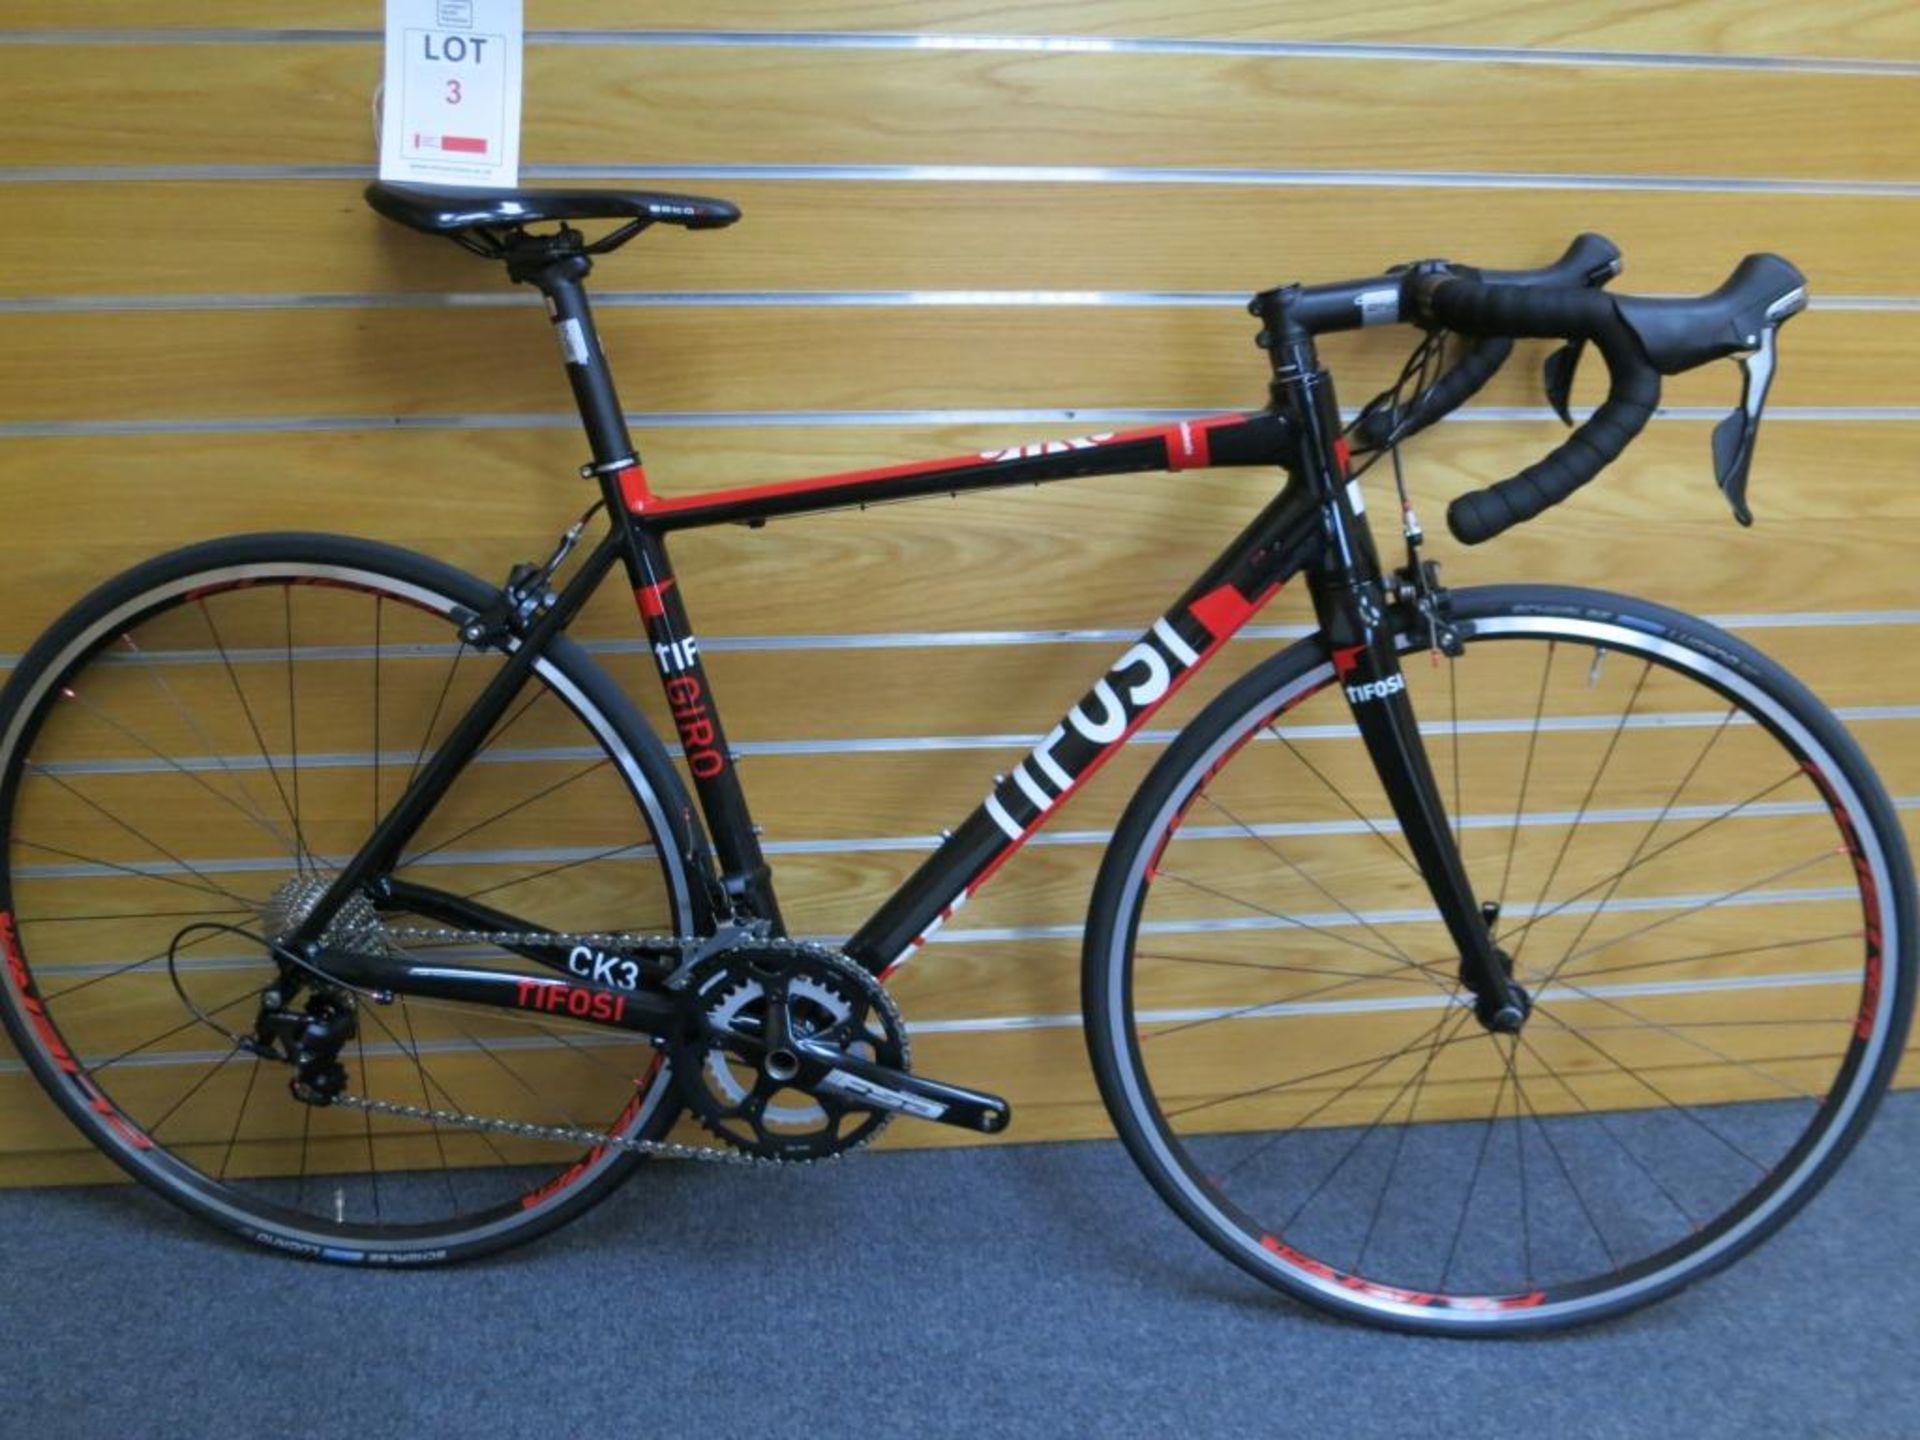 Tifosi CK3 Giro 105 Medium Bicycle SRP £899.99, TFX Aluminium Frame with Carbon Fork. Shimano 105